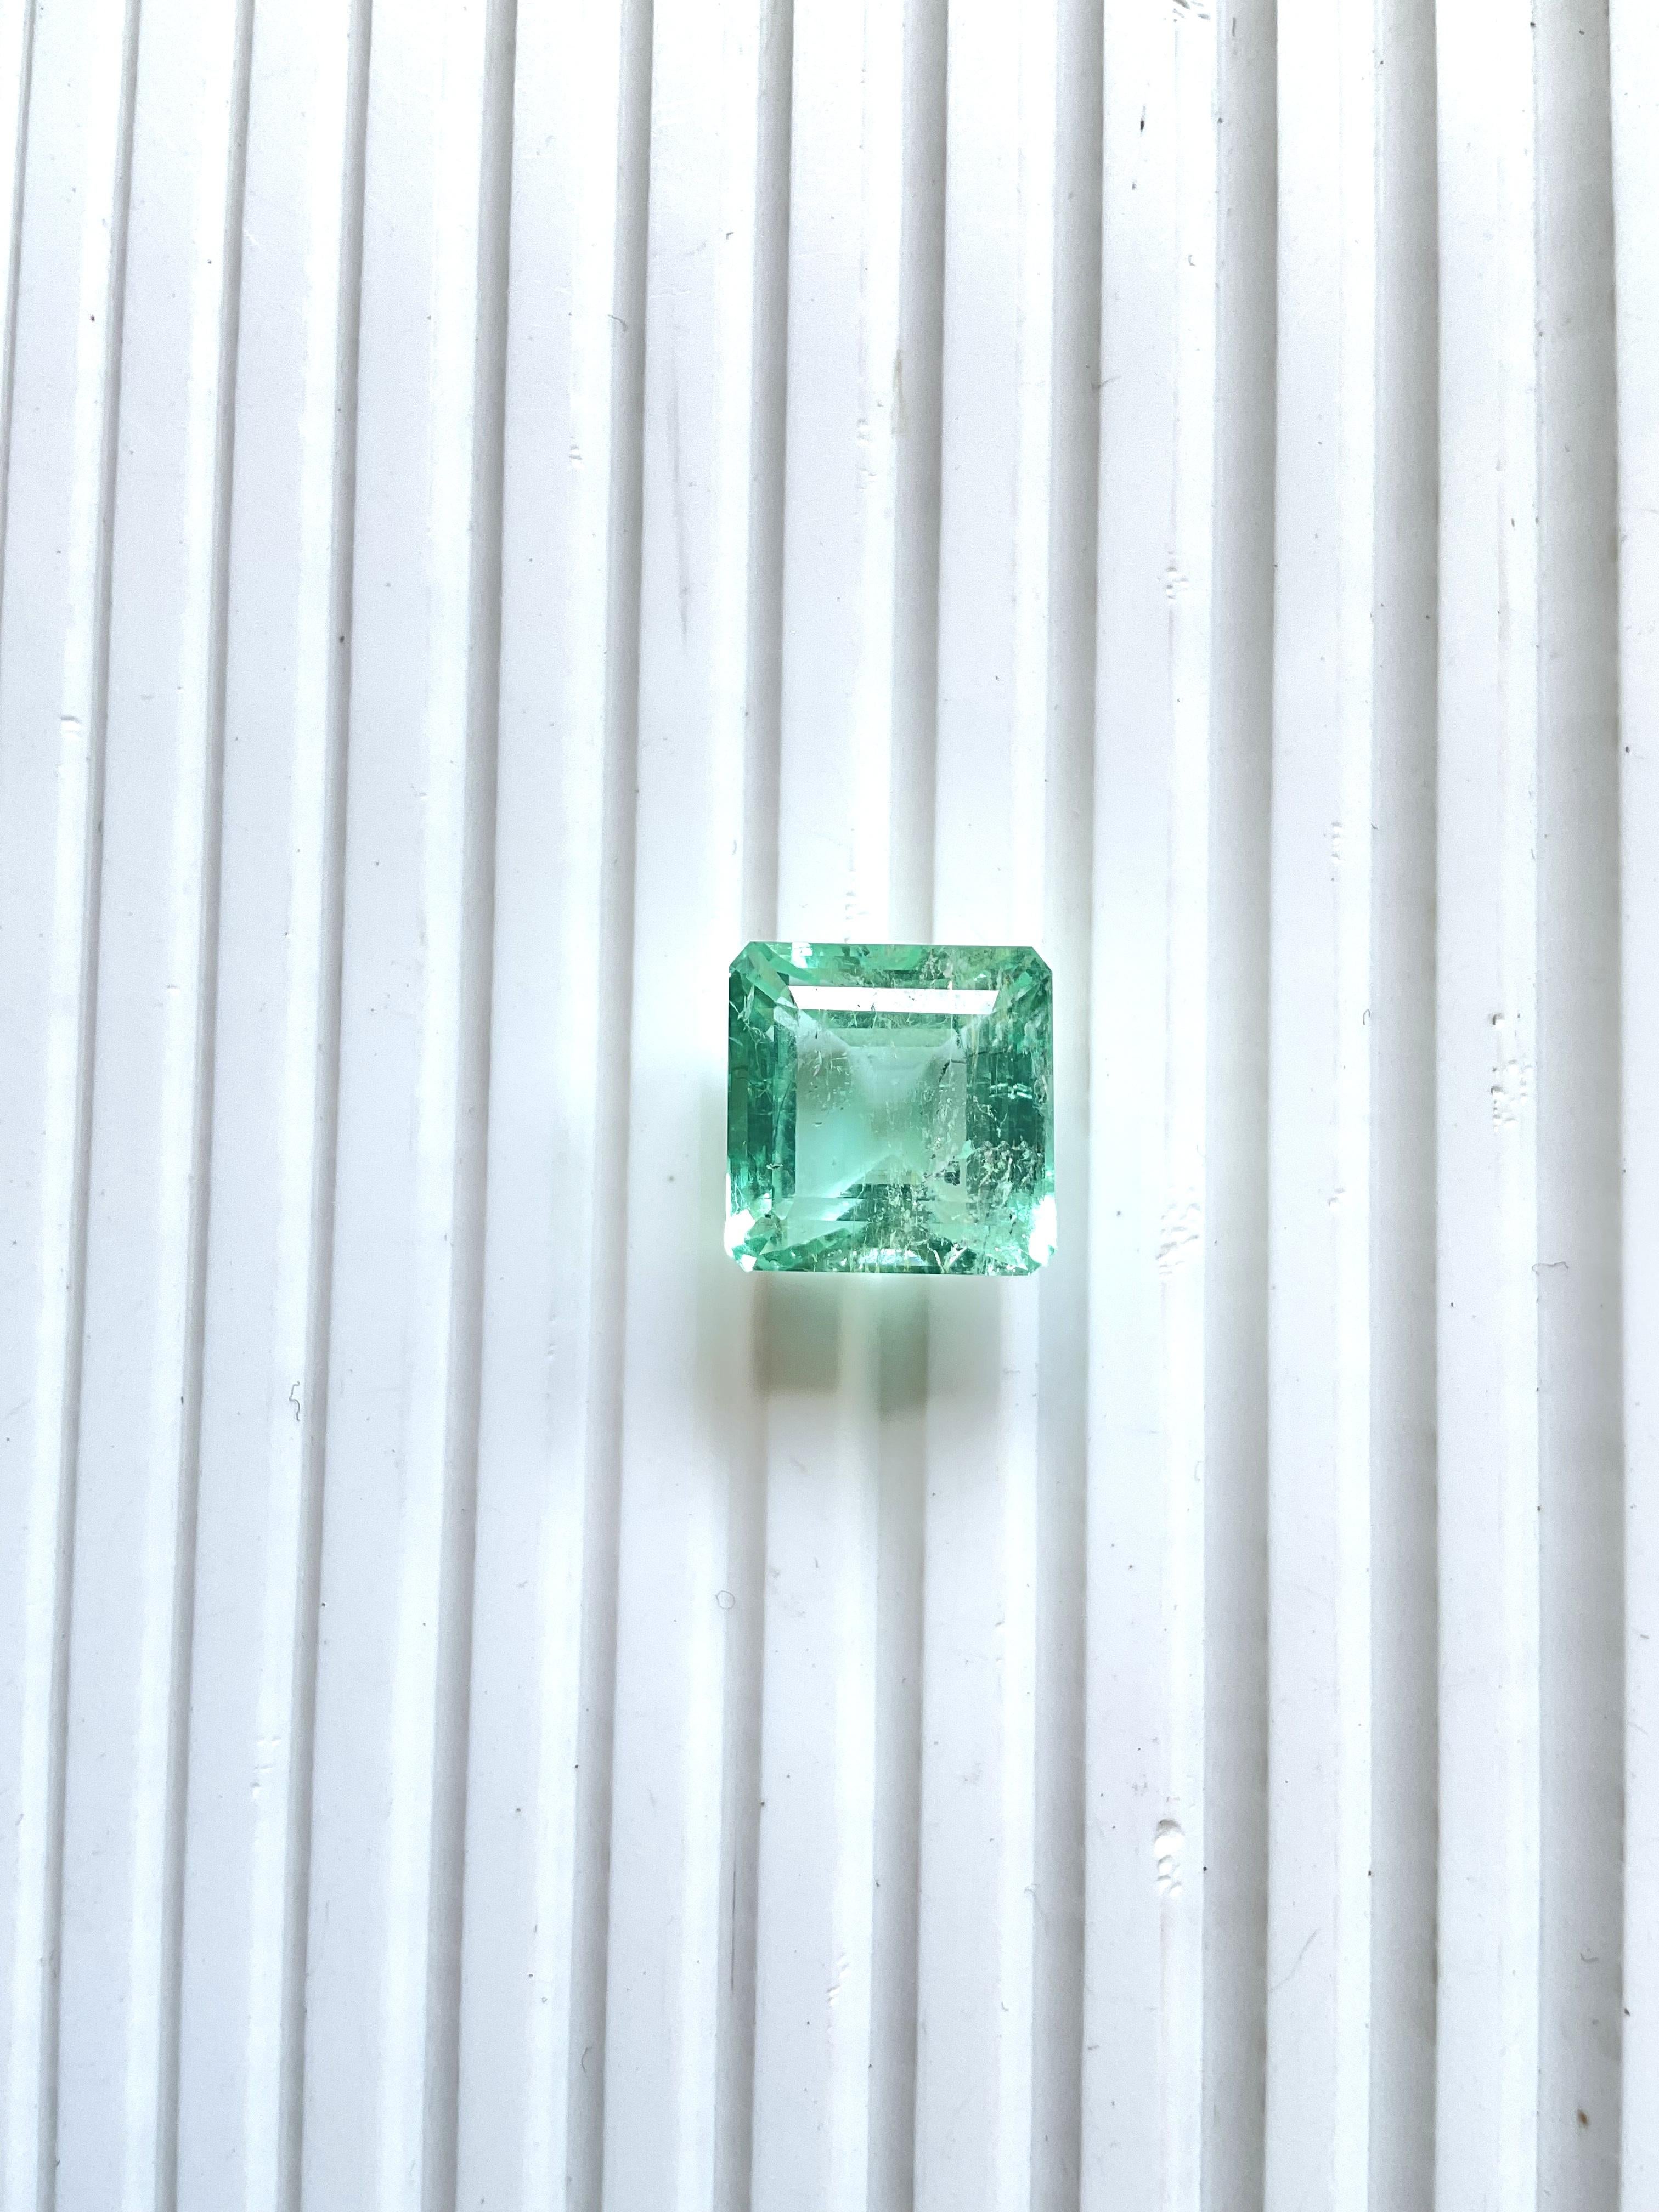 russian emerald price per carat